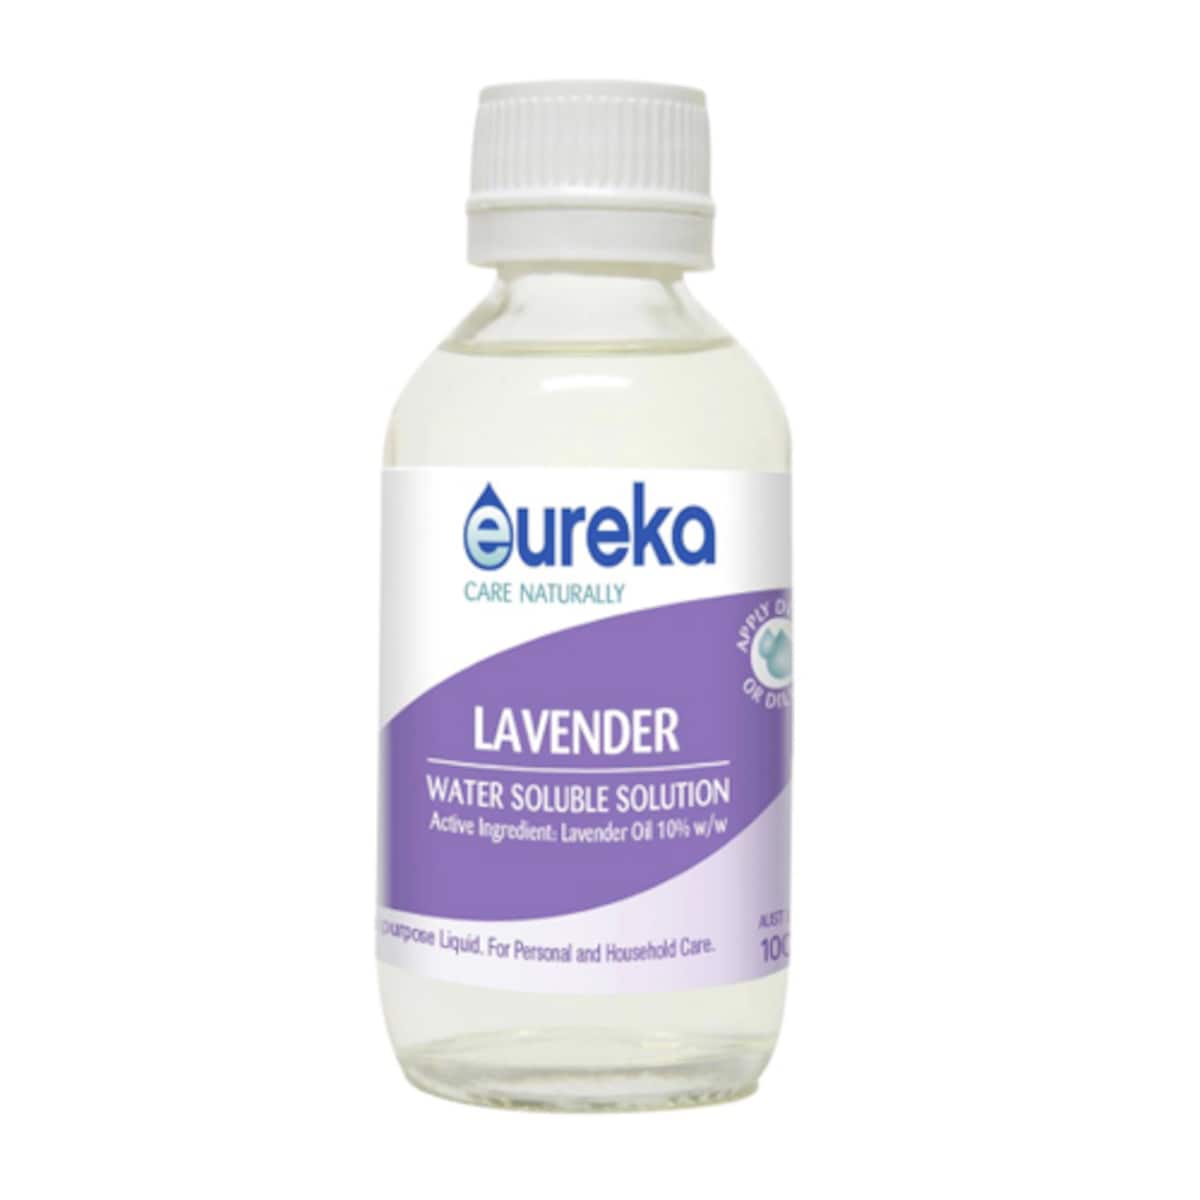 Eureka Lavender Water Soluble Solution 100ml